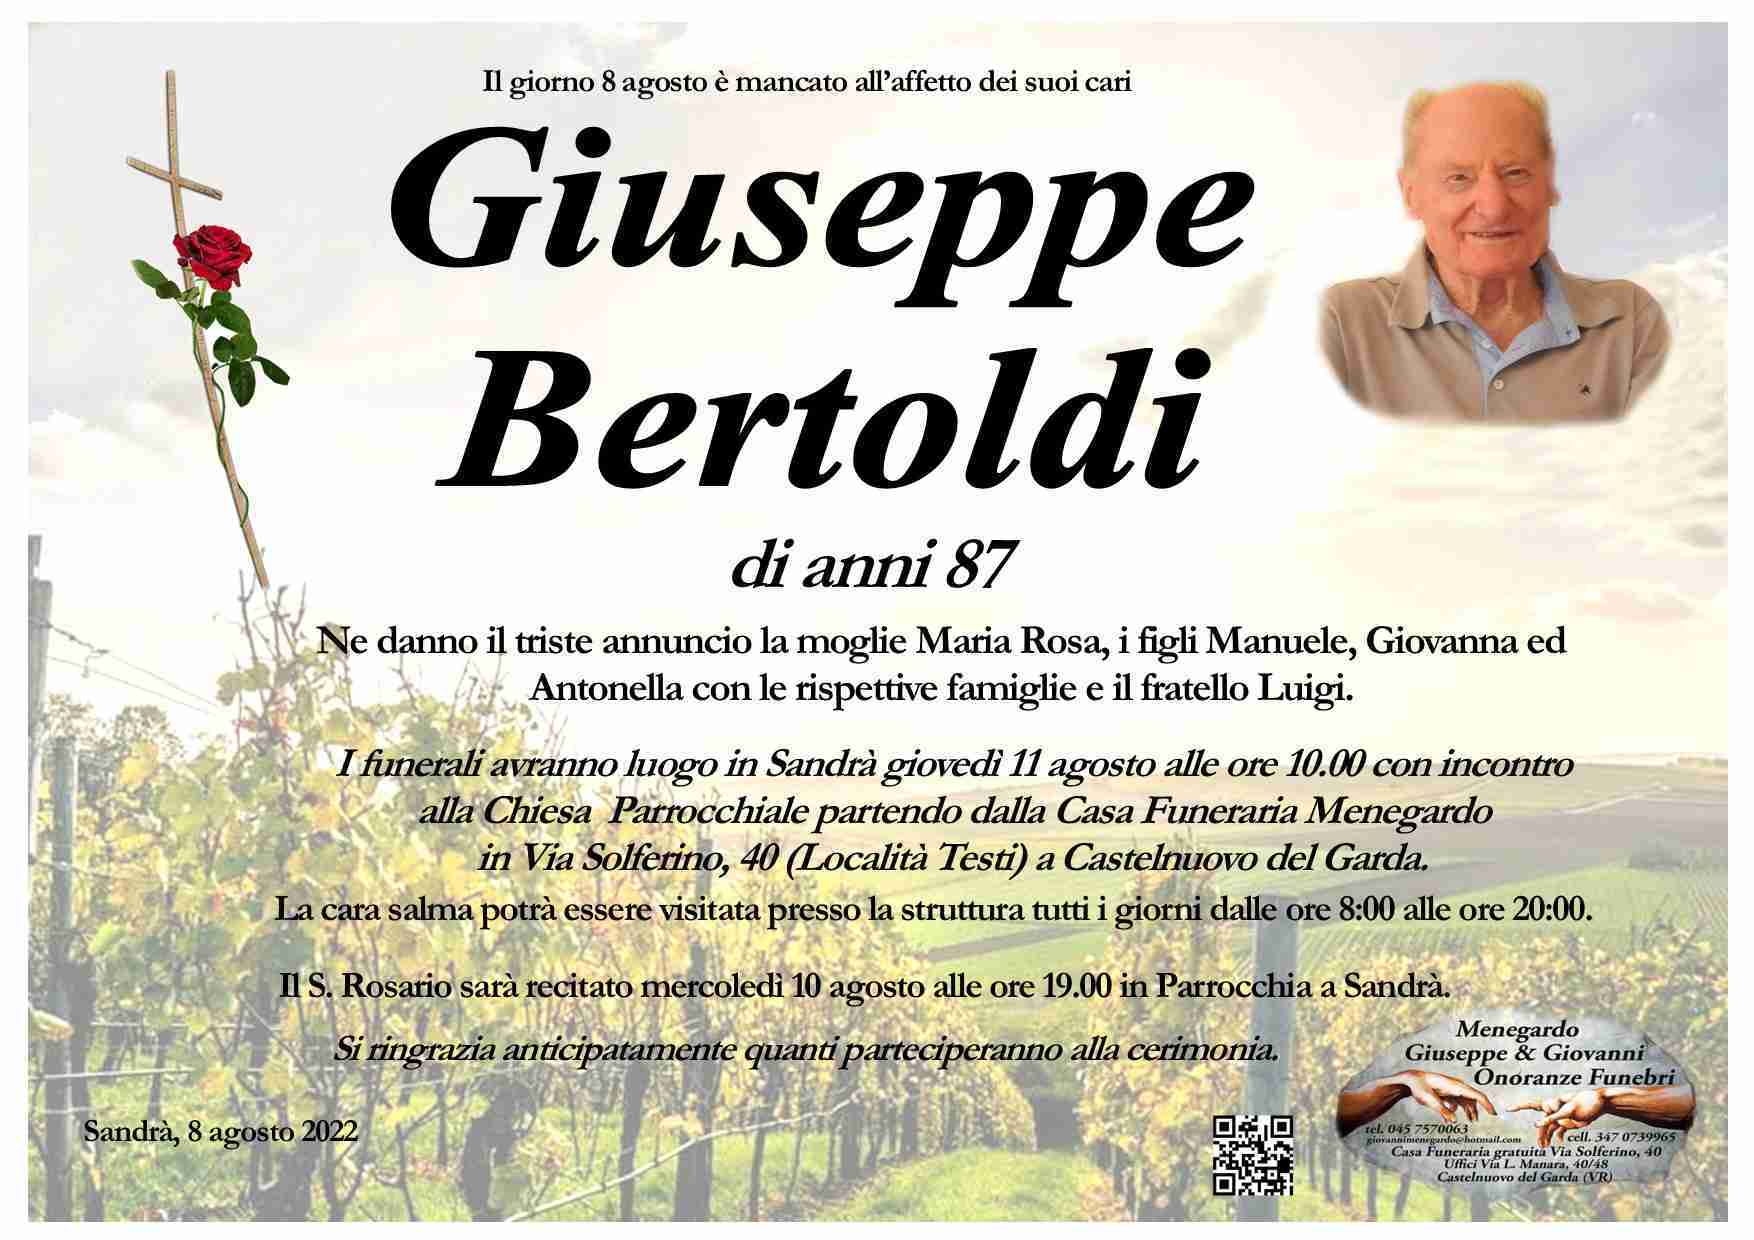 Giuseppe Bertoldi